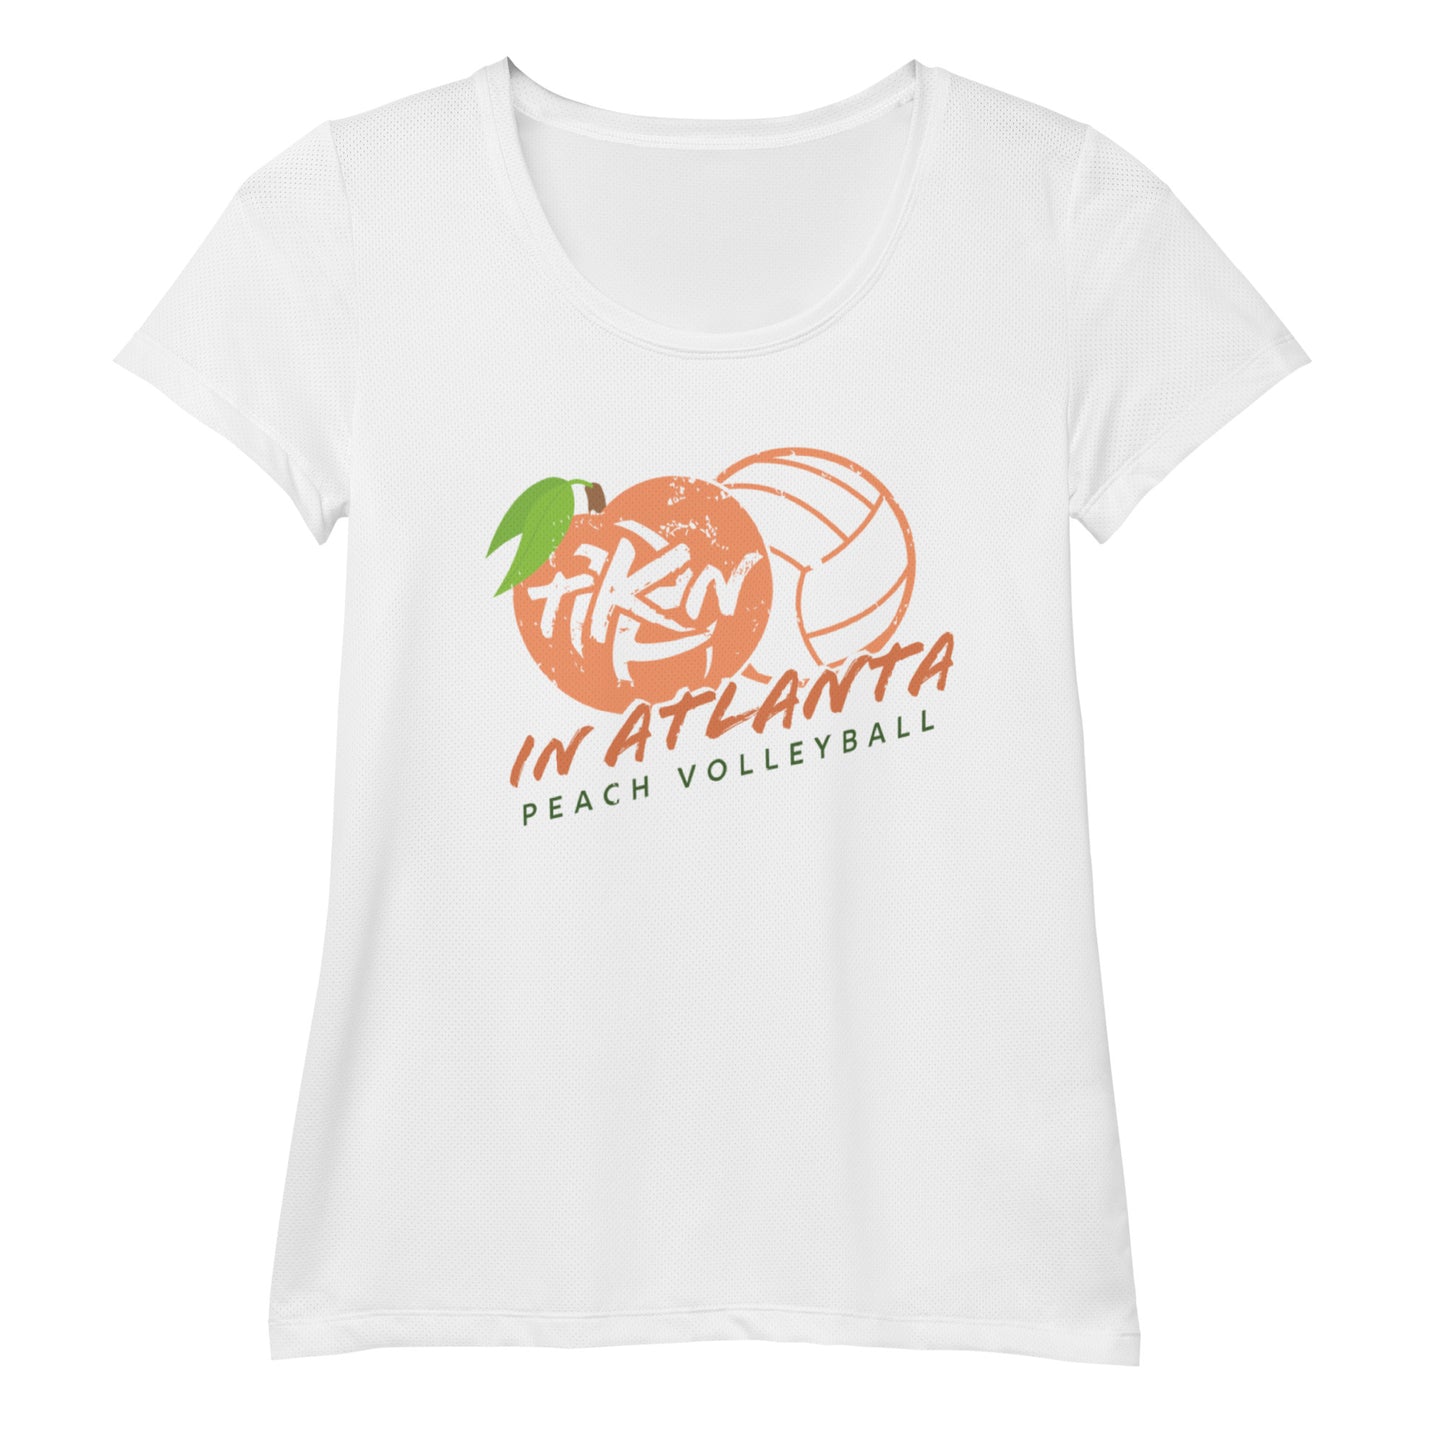 TKN Atlanta Women's Athletic T-shirt